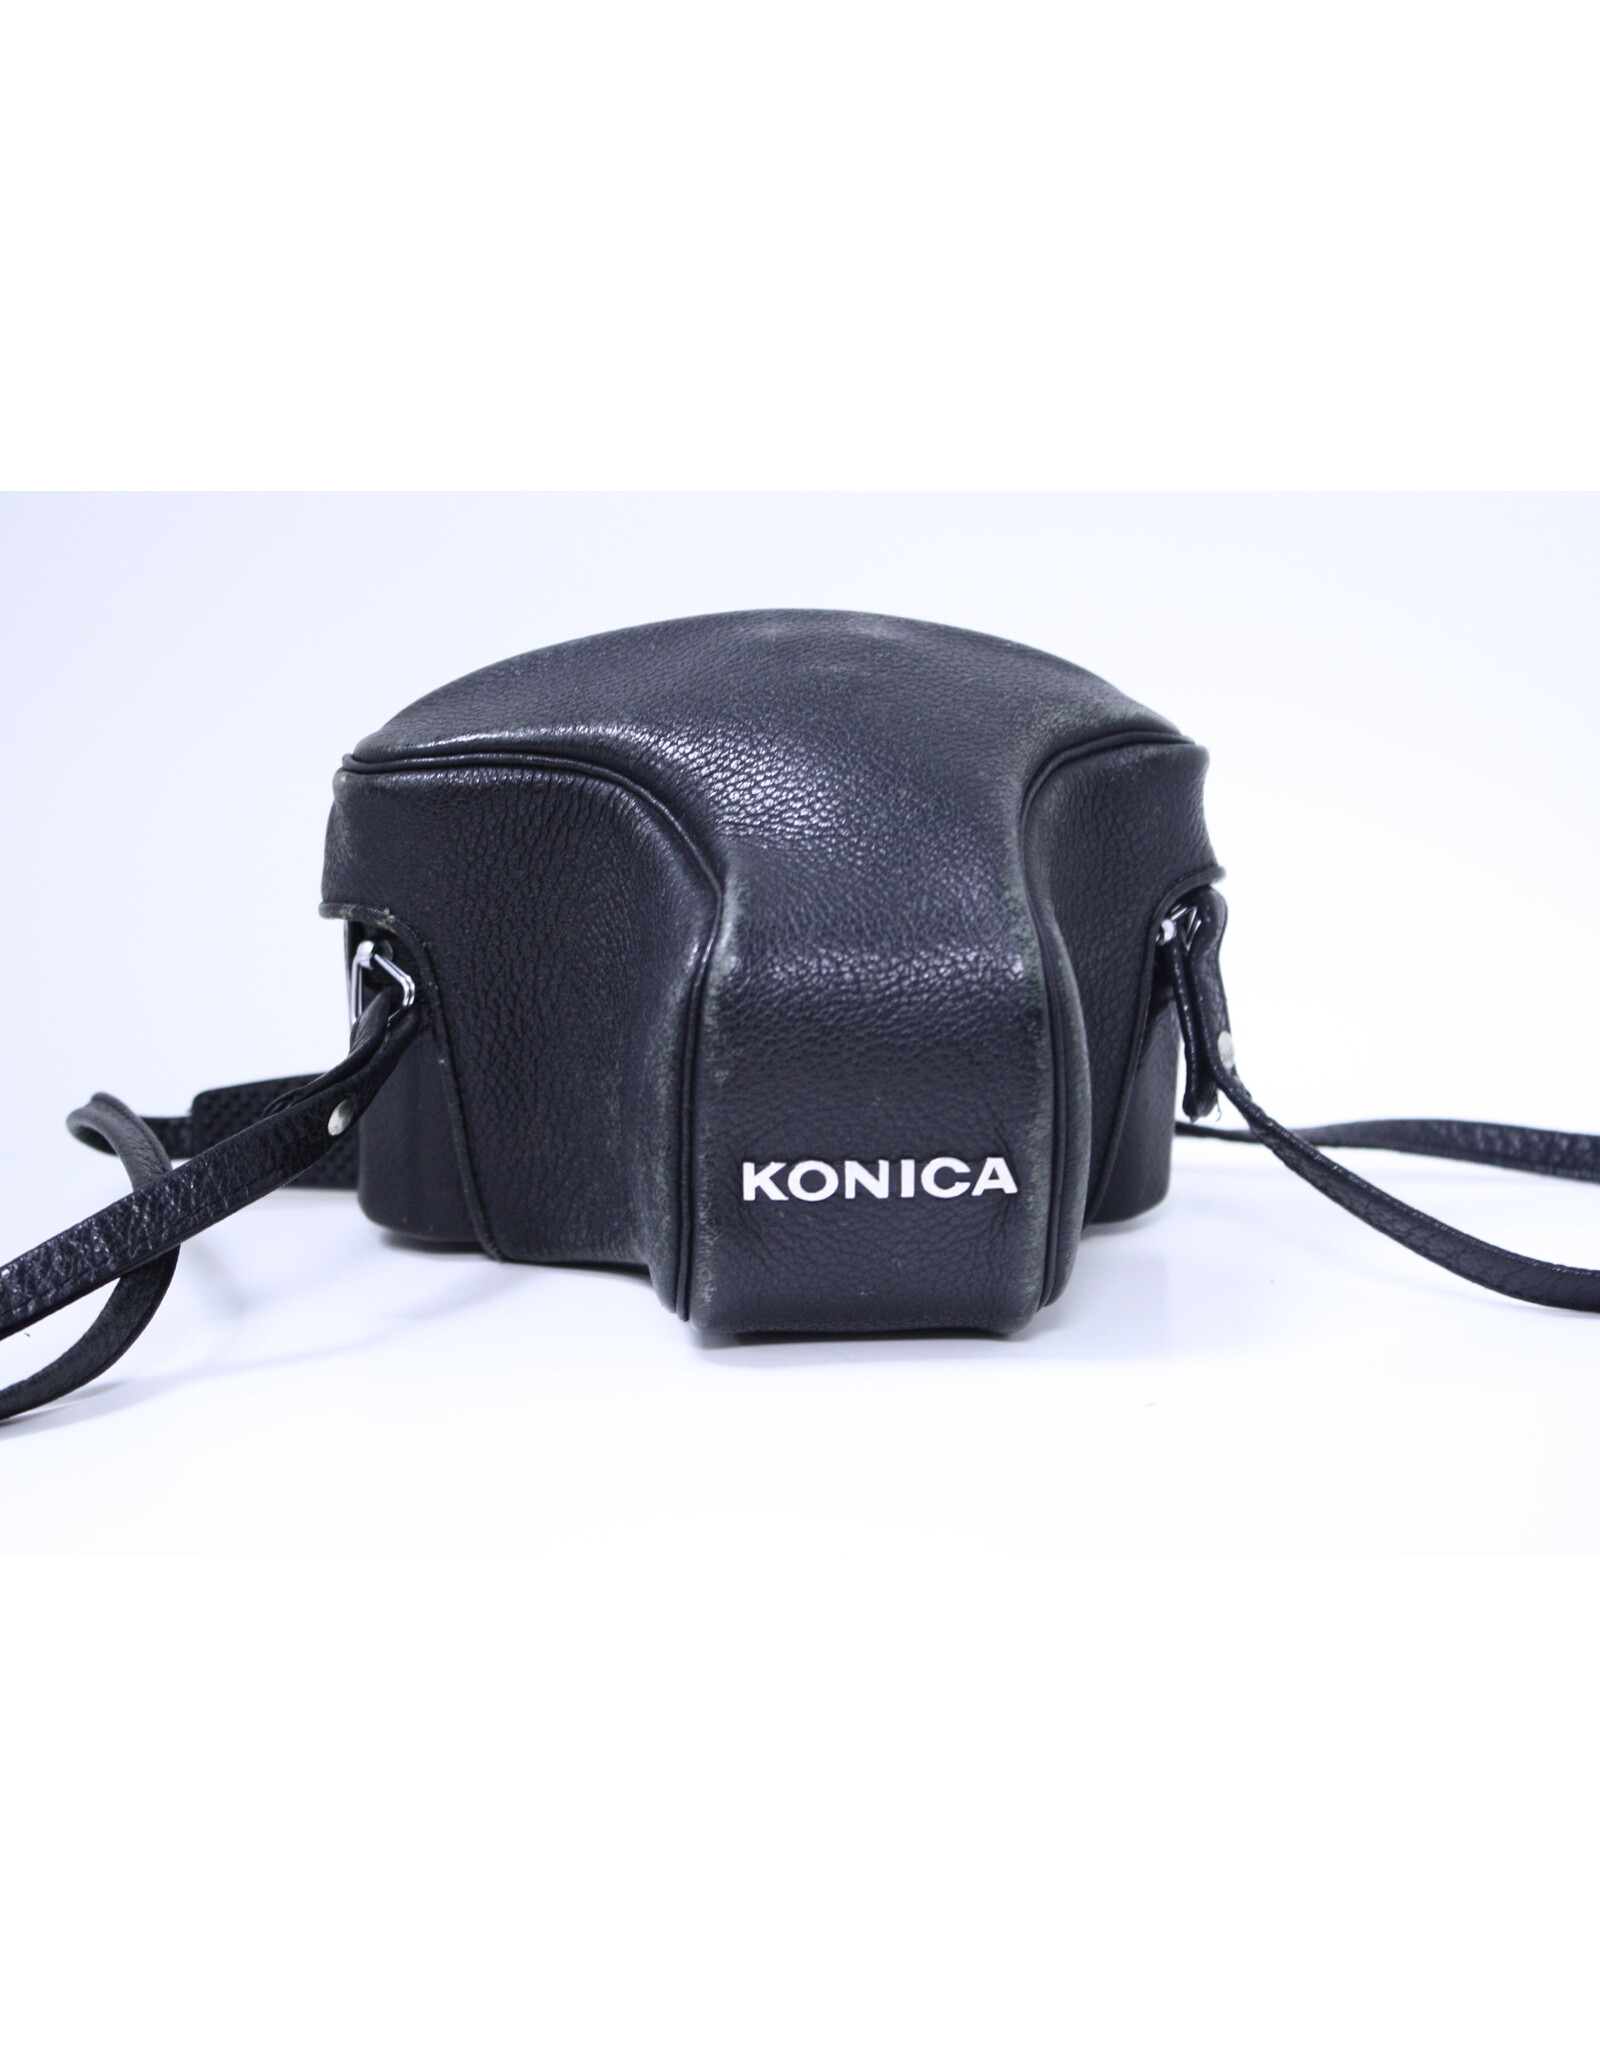 Konica Minolta Konica Autoreflex T 35mm Film SLR with 57mm f1.4 Hexanon Lens (TESTED!)